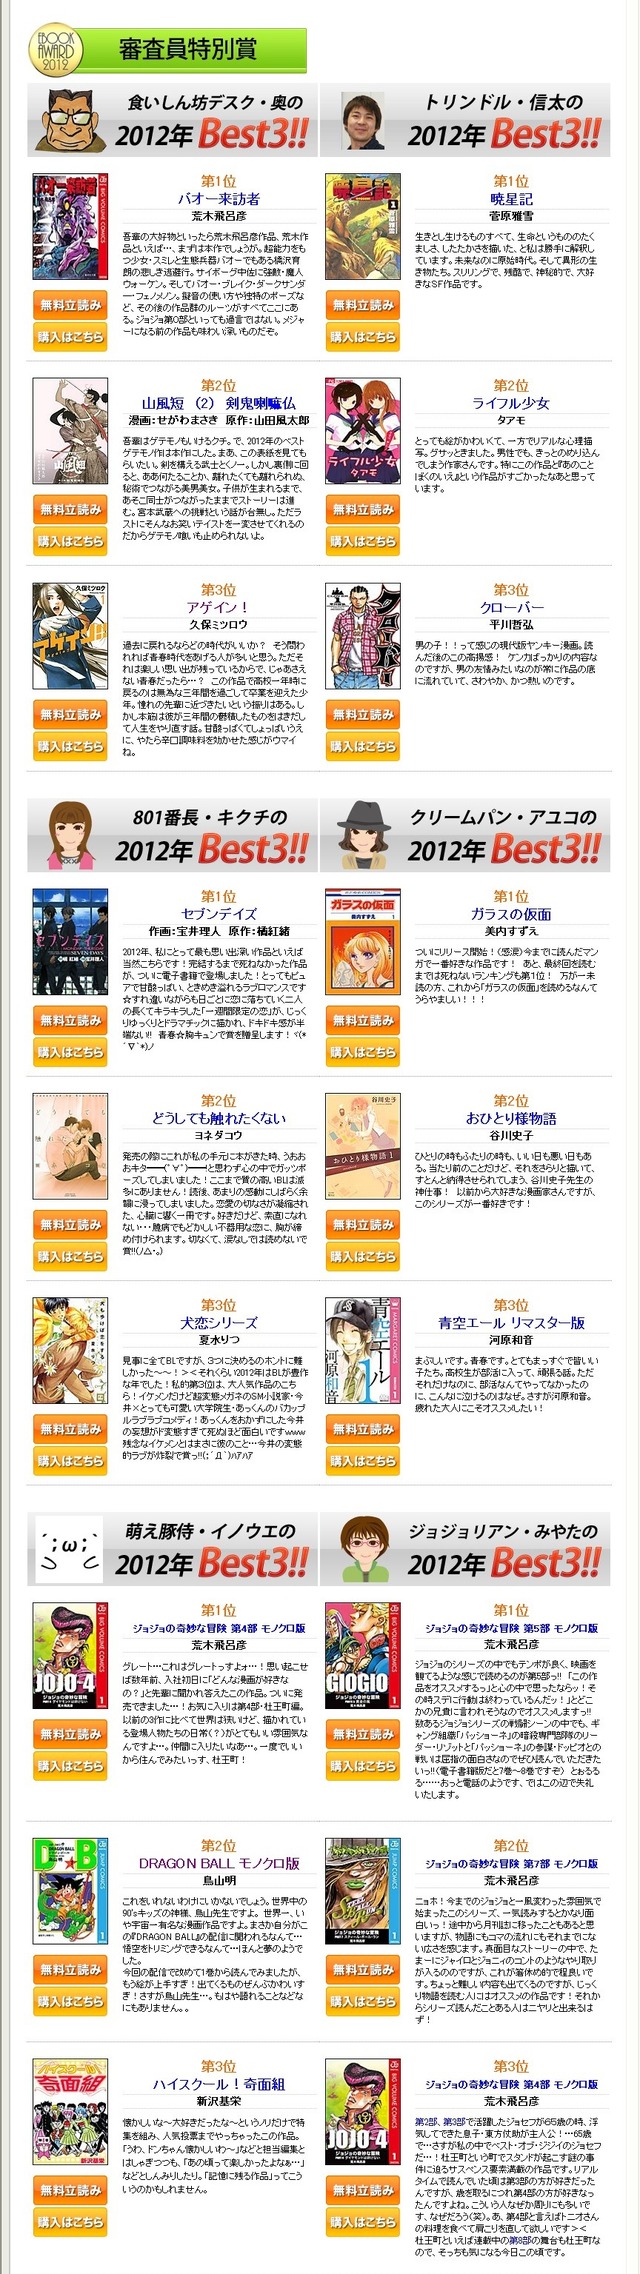 eBookJapan 2012年間ランキング。審査員特別賞